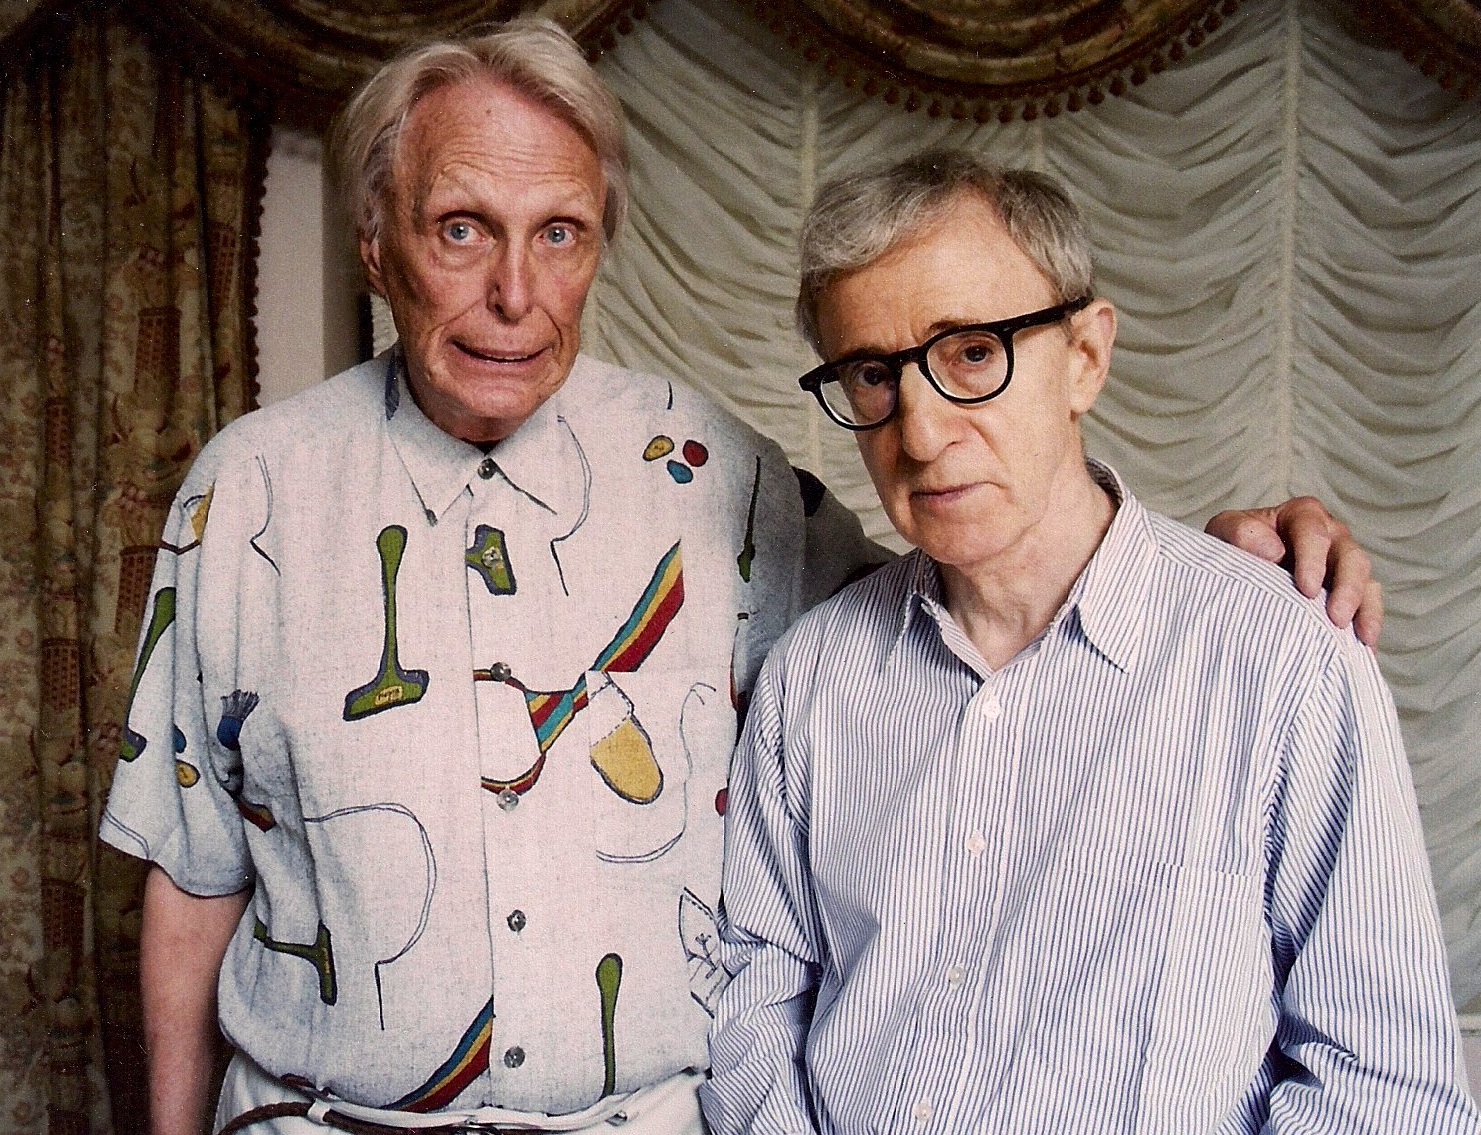 With Woody Allen